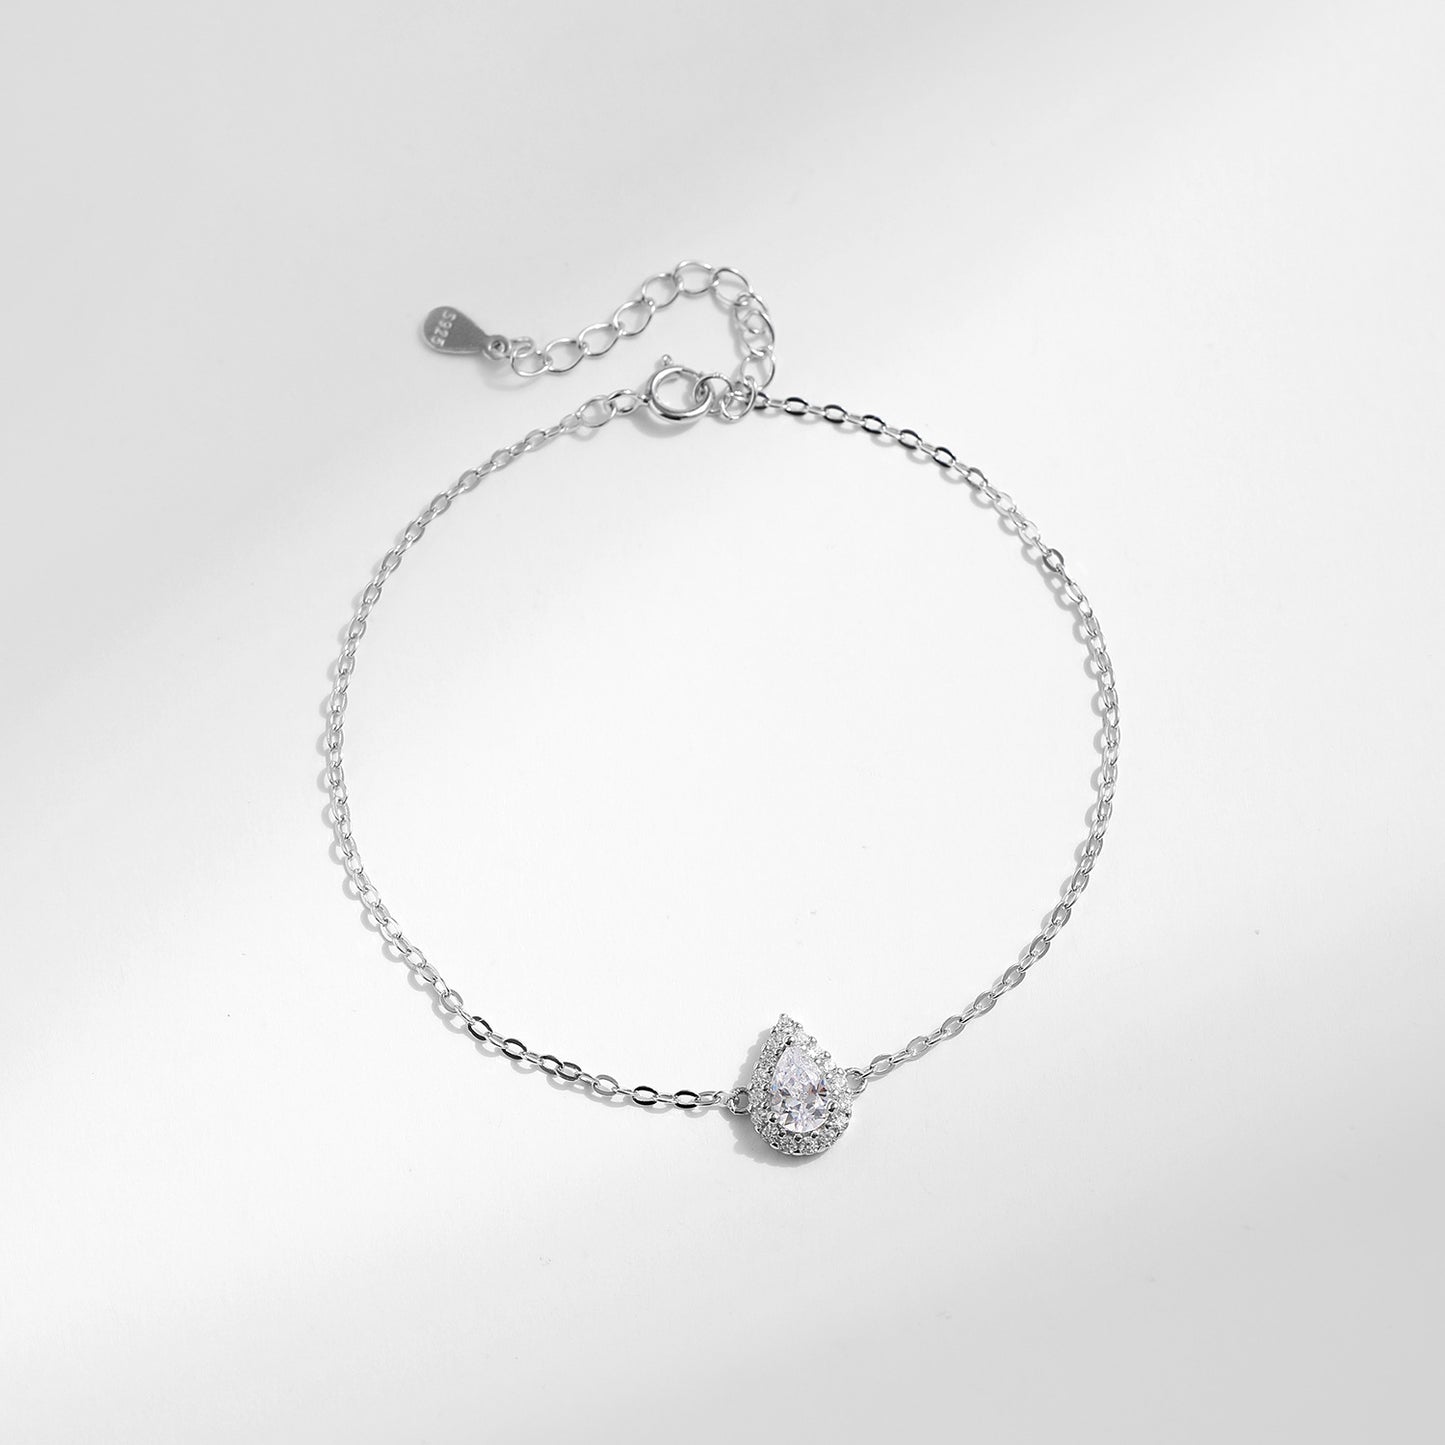 Elegant Zircon Drop Bracelet with Sterling Silver and Luxury Design